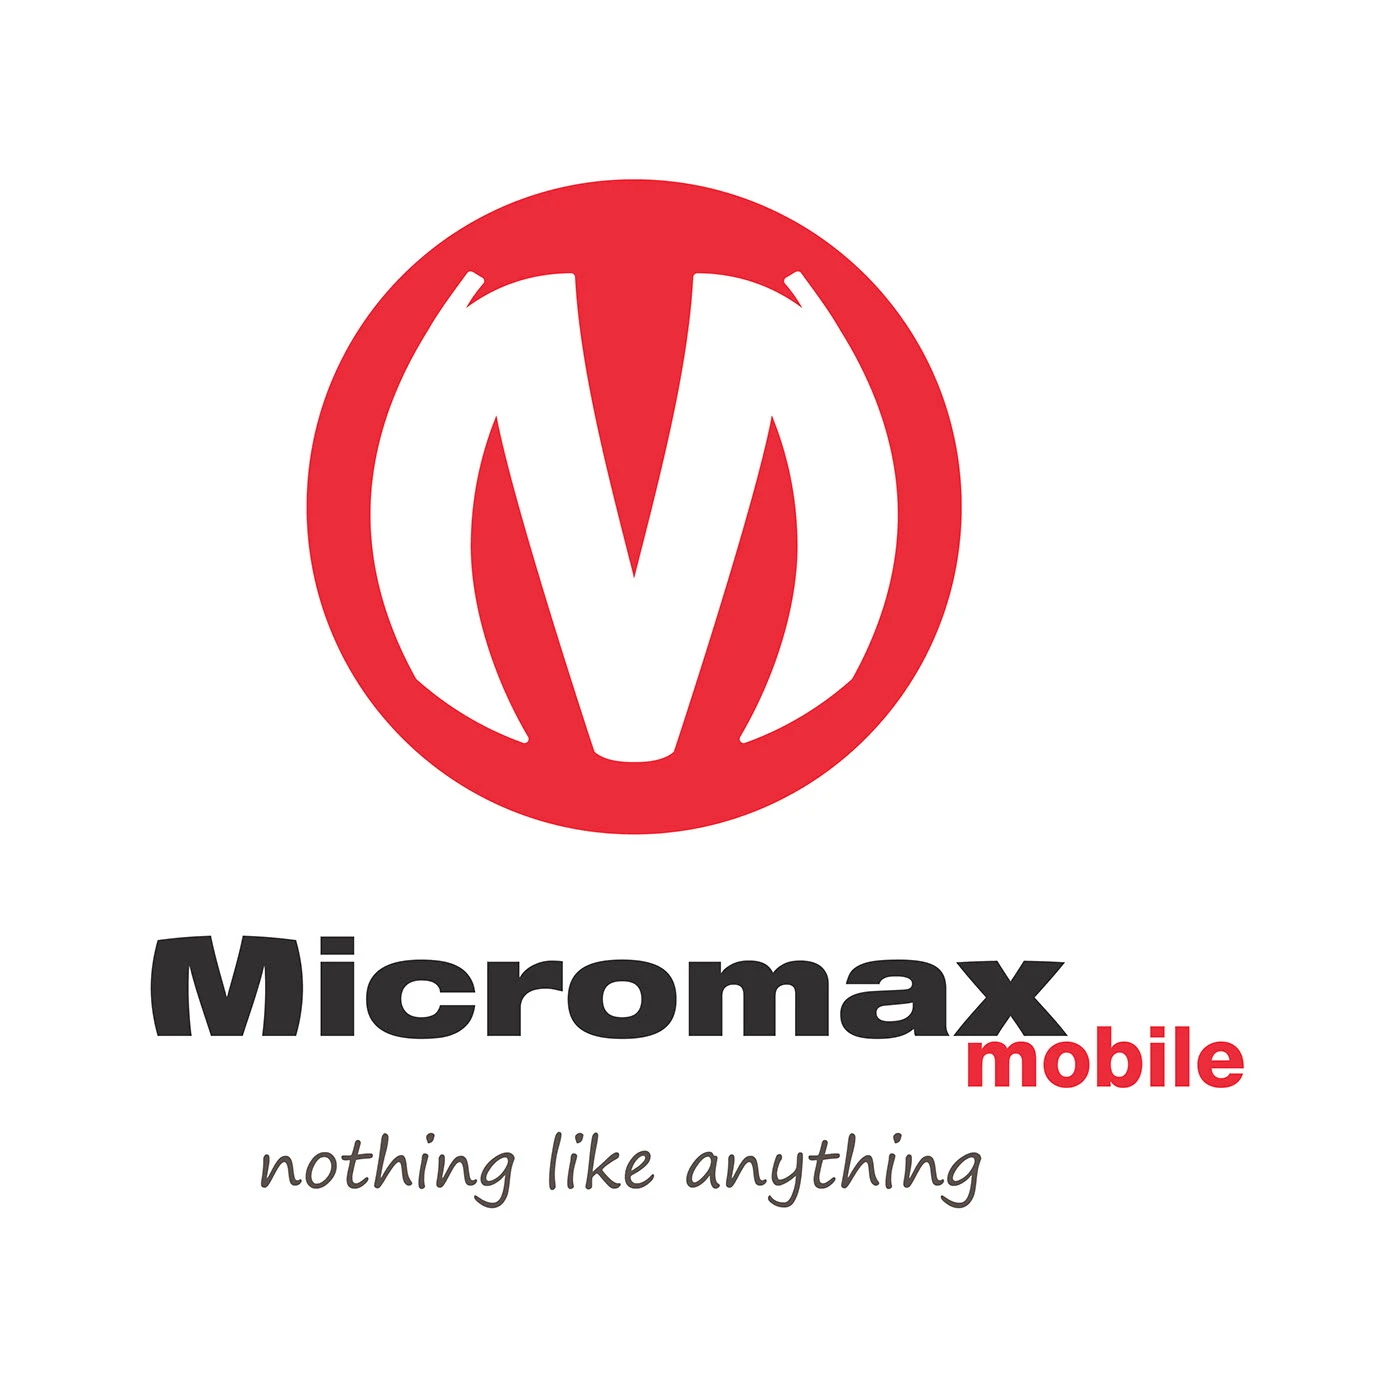 MicroMax